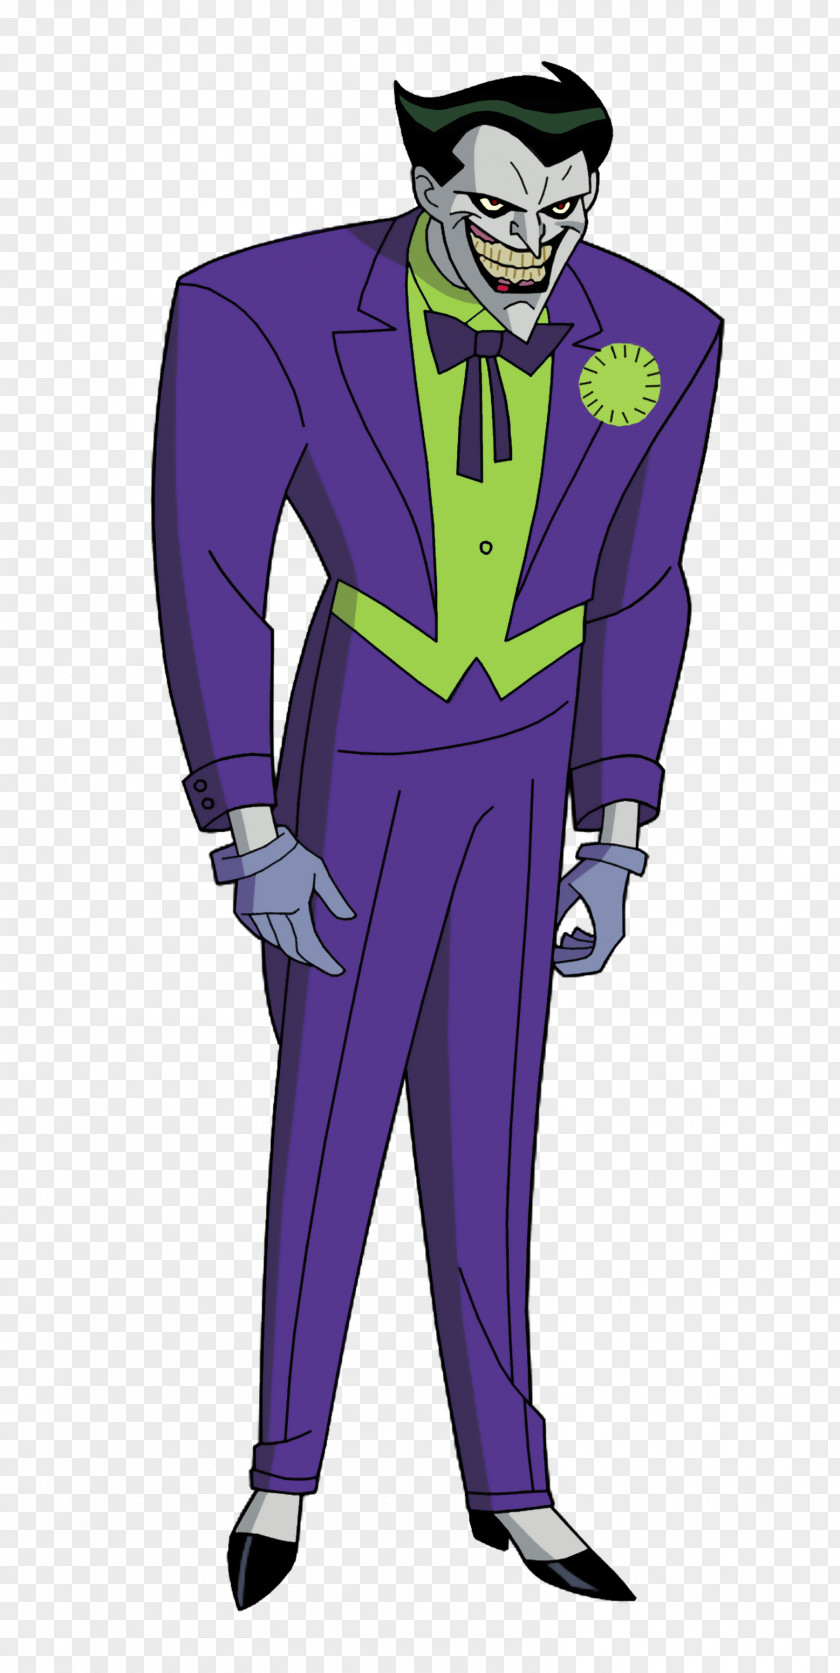 Joker Batman Harley Quinn Animated Series DC Universe PNG